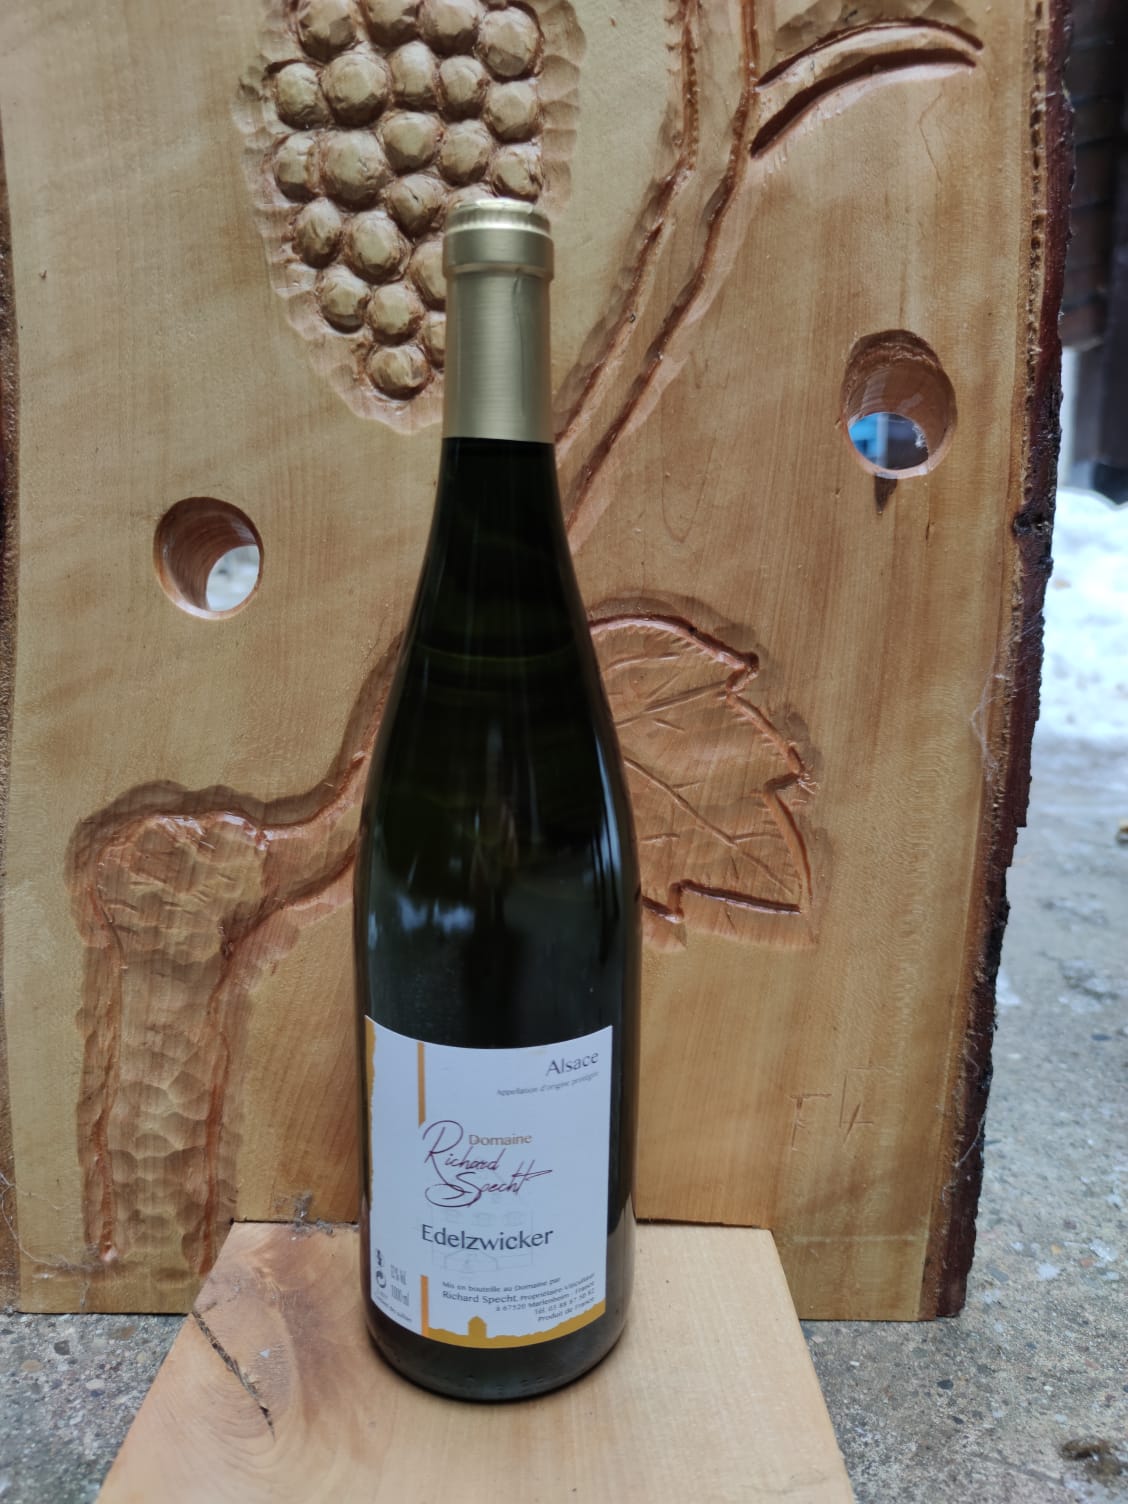 Edelzwicker - Vin blanc D'alsace Domaine Richard Specht à Marlenheim